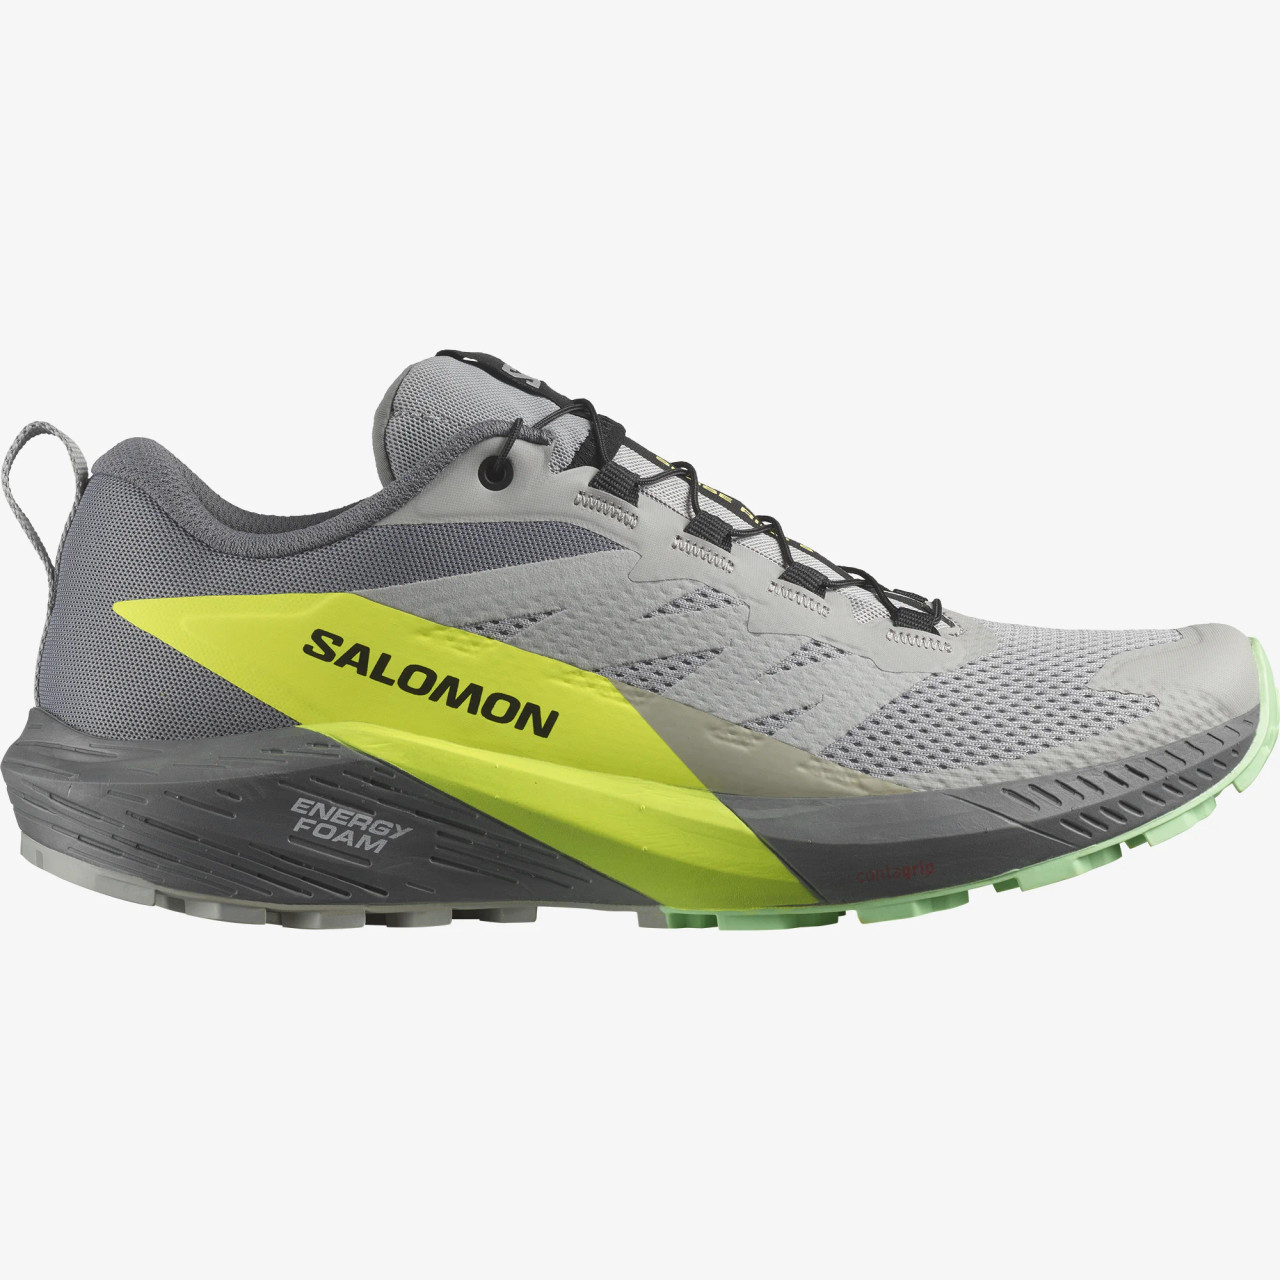 Salomon Men's Ride 5 Trail Running Shoes - Alloy/Quiet Shade/Safety Chaar